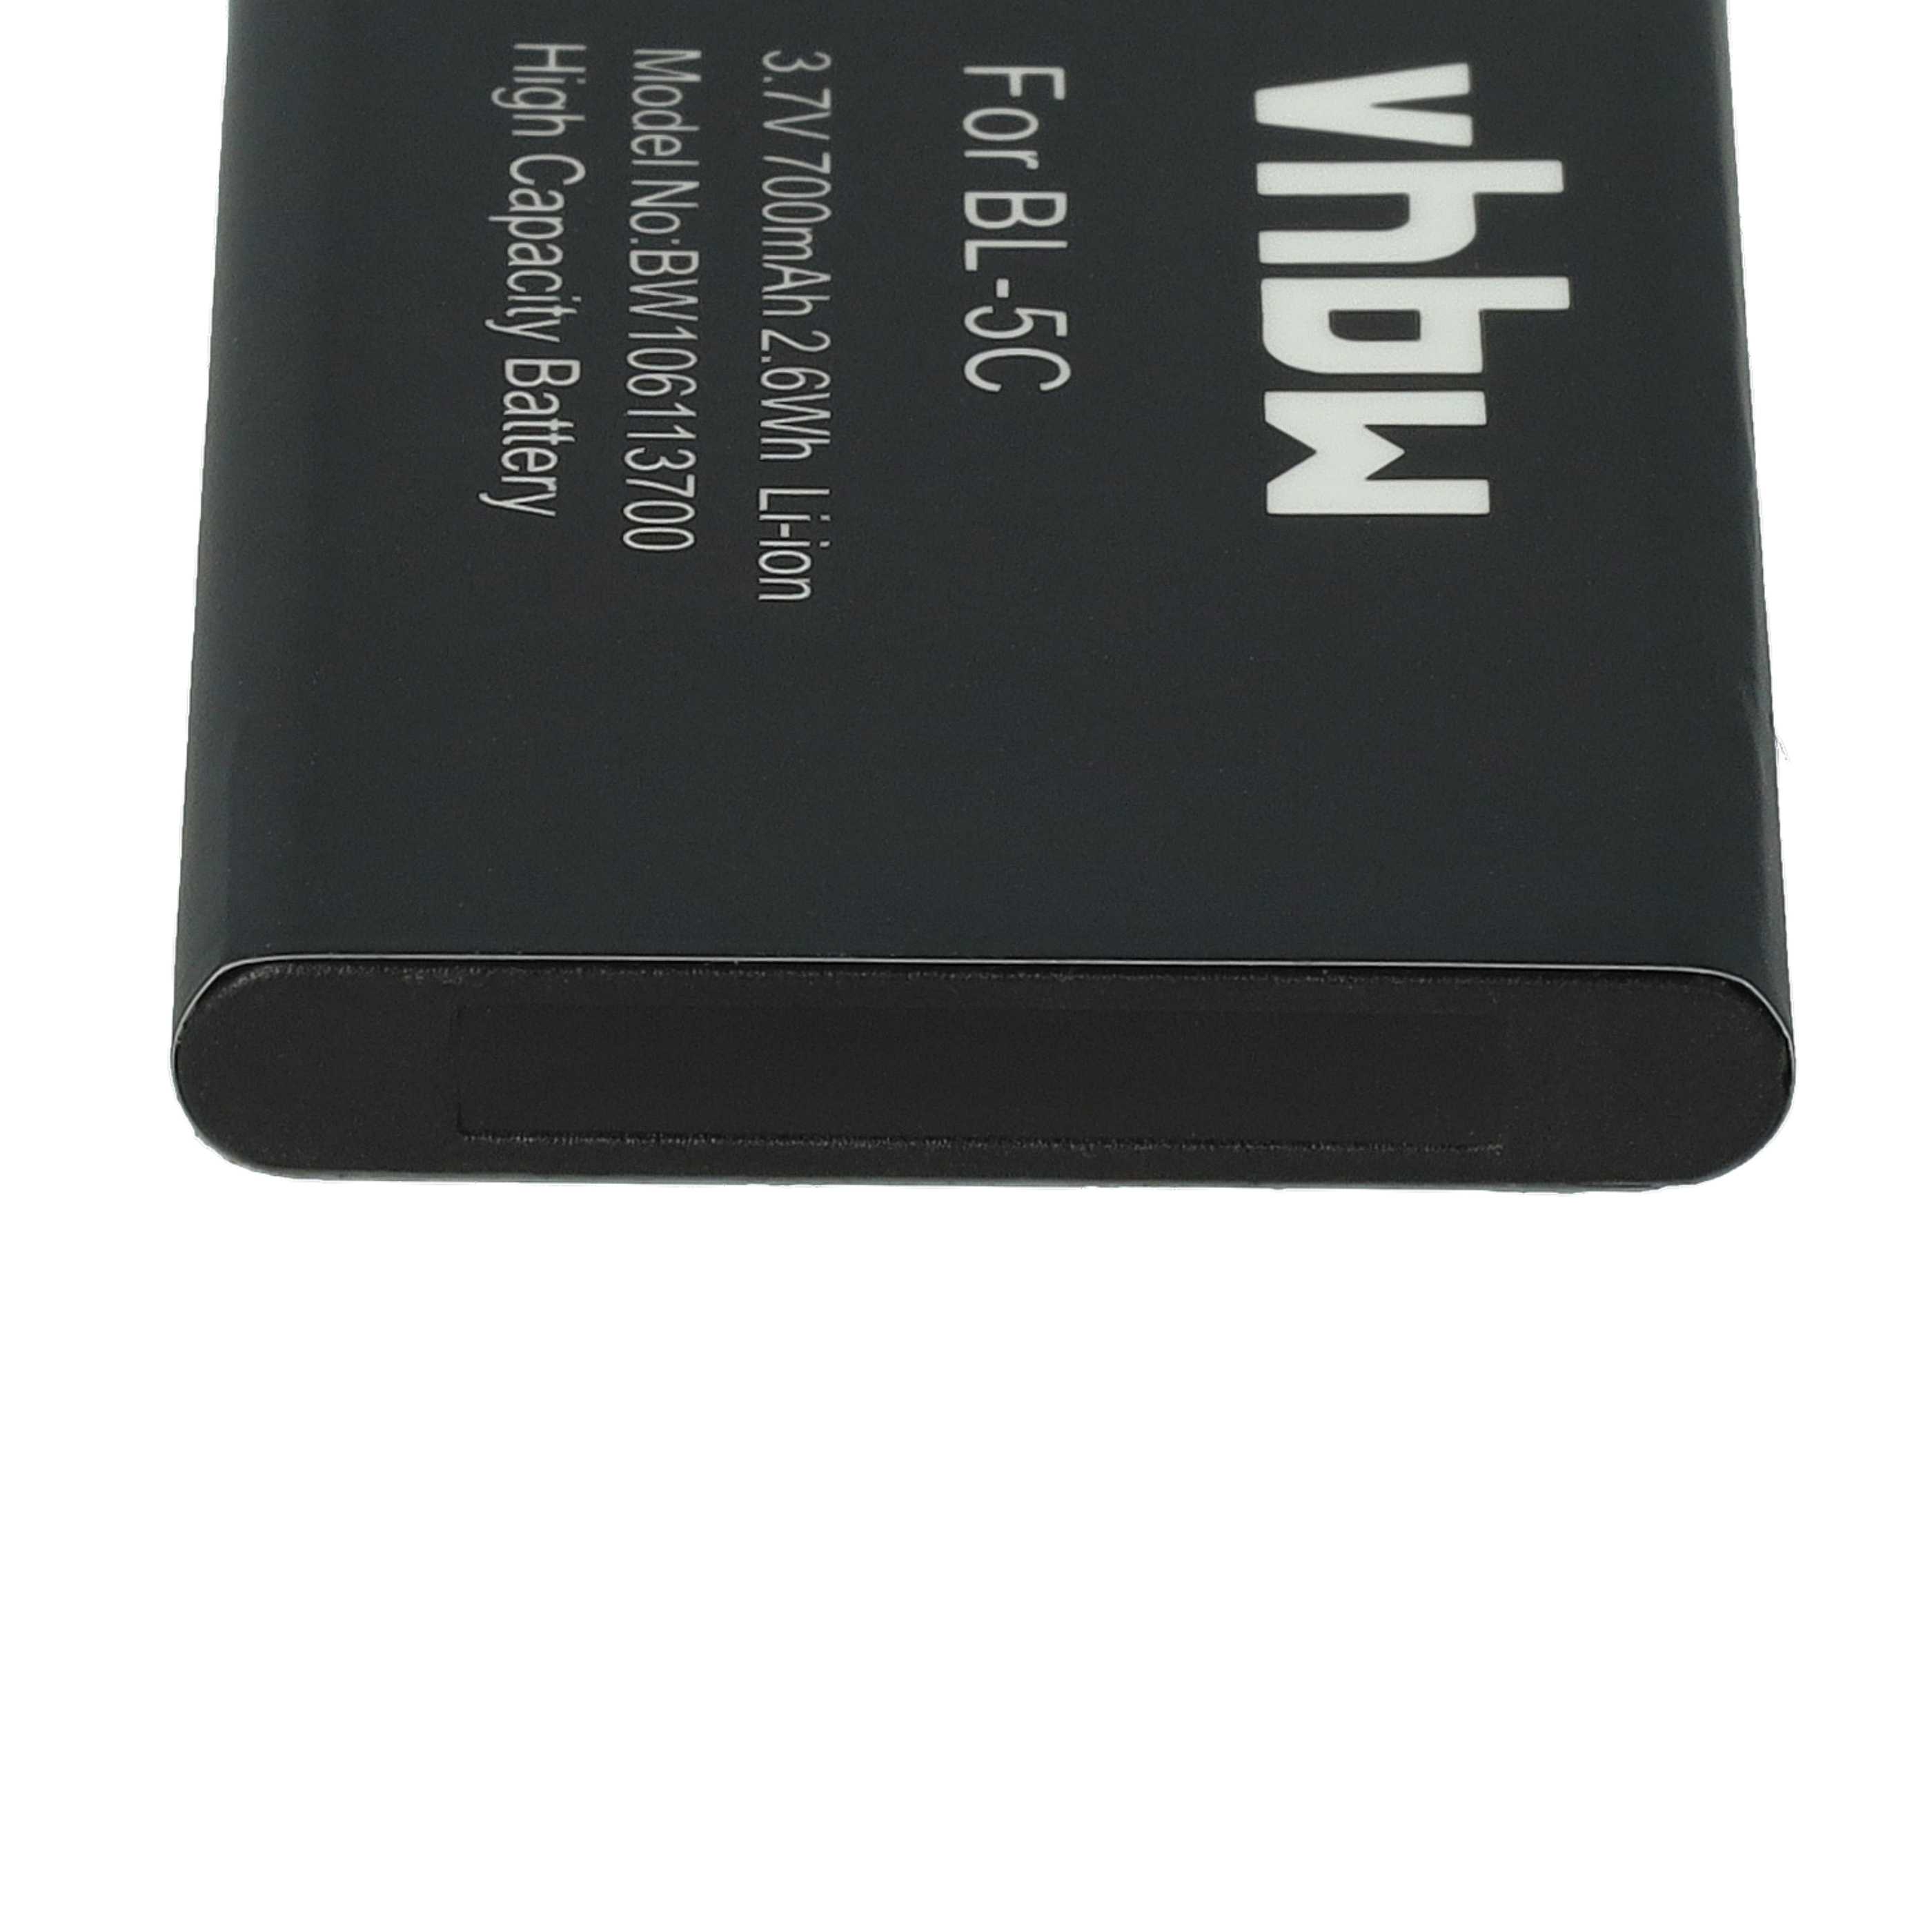 Batería reemplaza CAT 1ICP5/3450 1S1P para móvil, teléfono Anycool - 700 mAh 3,7 V Li-Ion